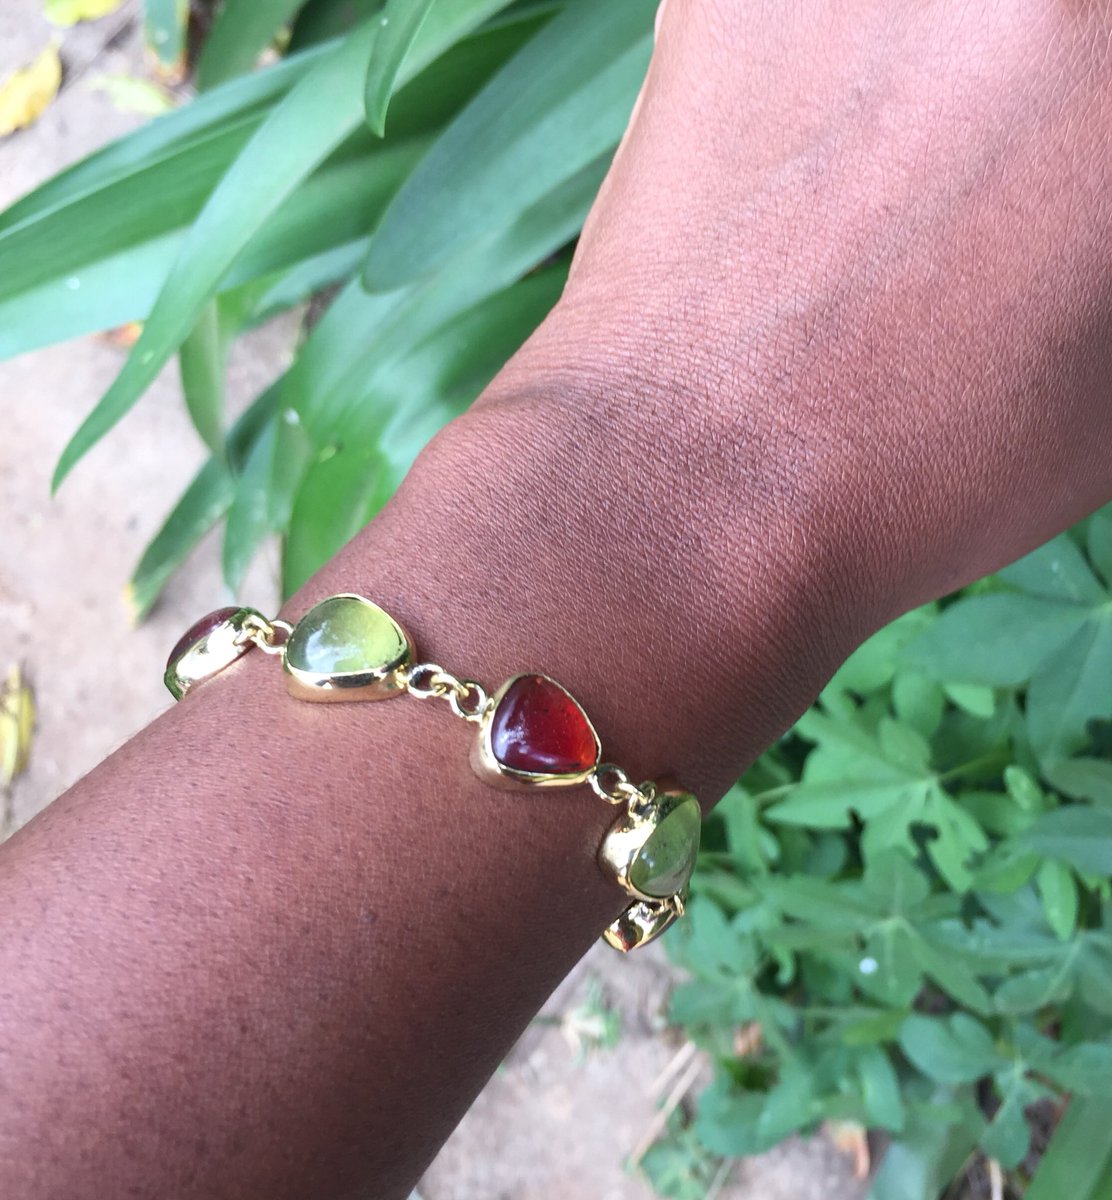 ✨New IN✨ Introducing The Kirangi Bracelet | Handmade from recycled brass and glass using traditional techniques. 

#KoKobyKhakasa #WomensFashion #RecycledBrass #Elegant #GlassBracelet #BrassBracelet #Jewellery #Accessories #Artisan #BrassJewellery #Handcrafted #MadeinKenya